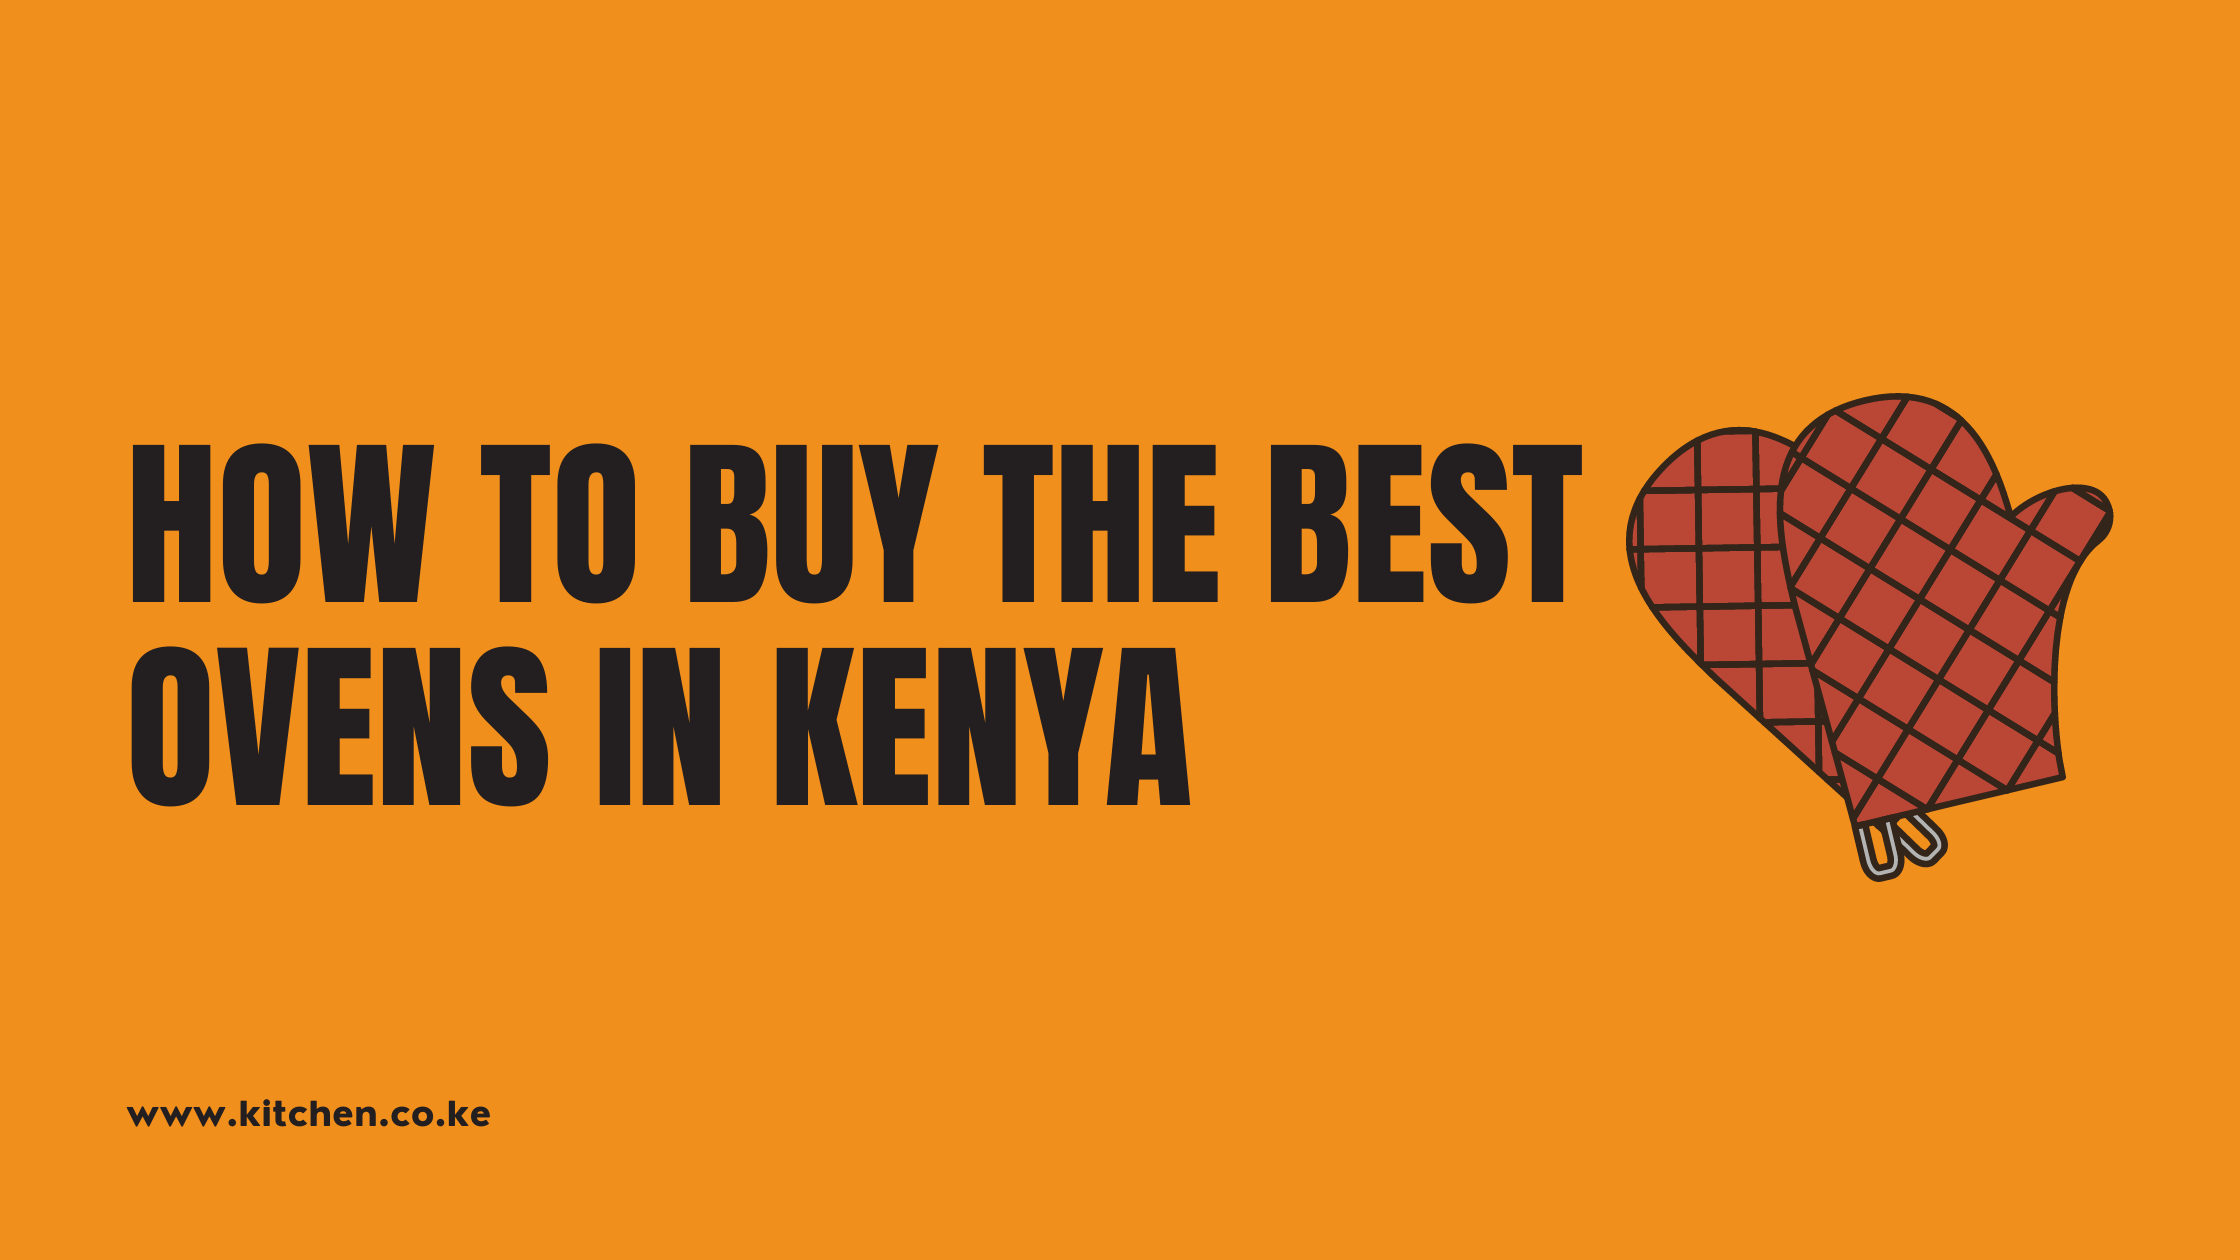 Ovens in Kenya: How To Buy The Best in 2022